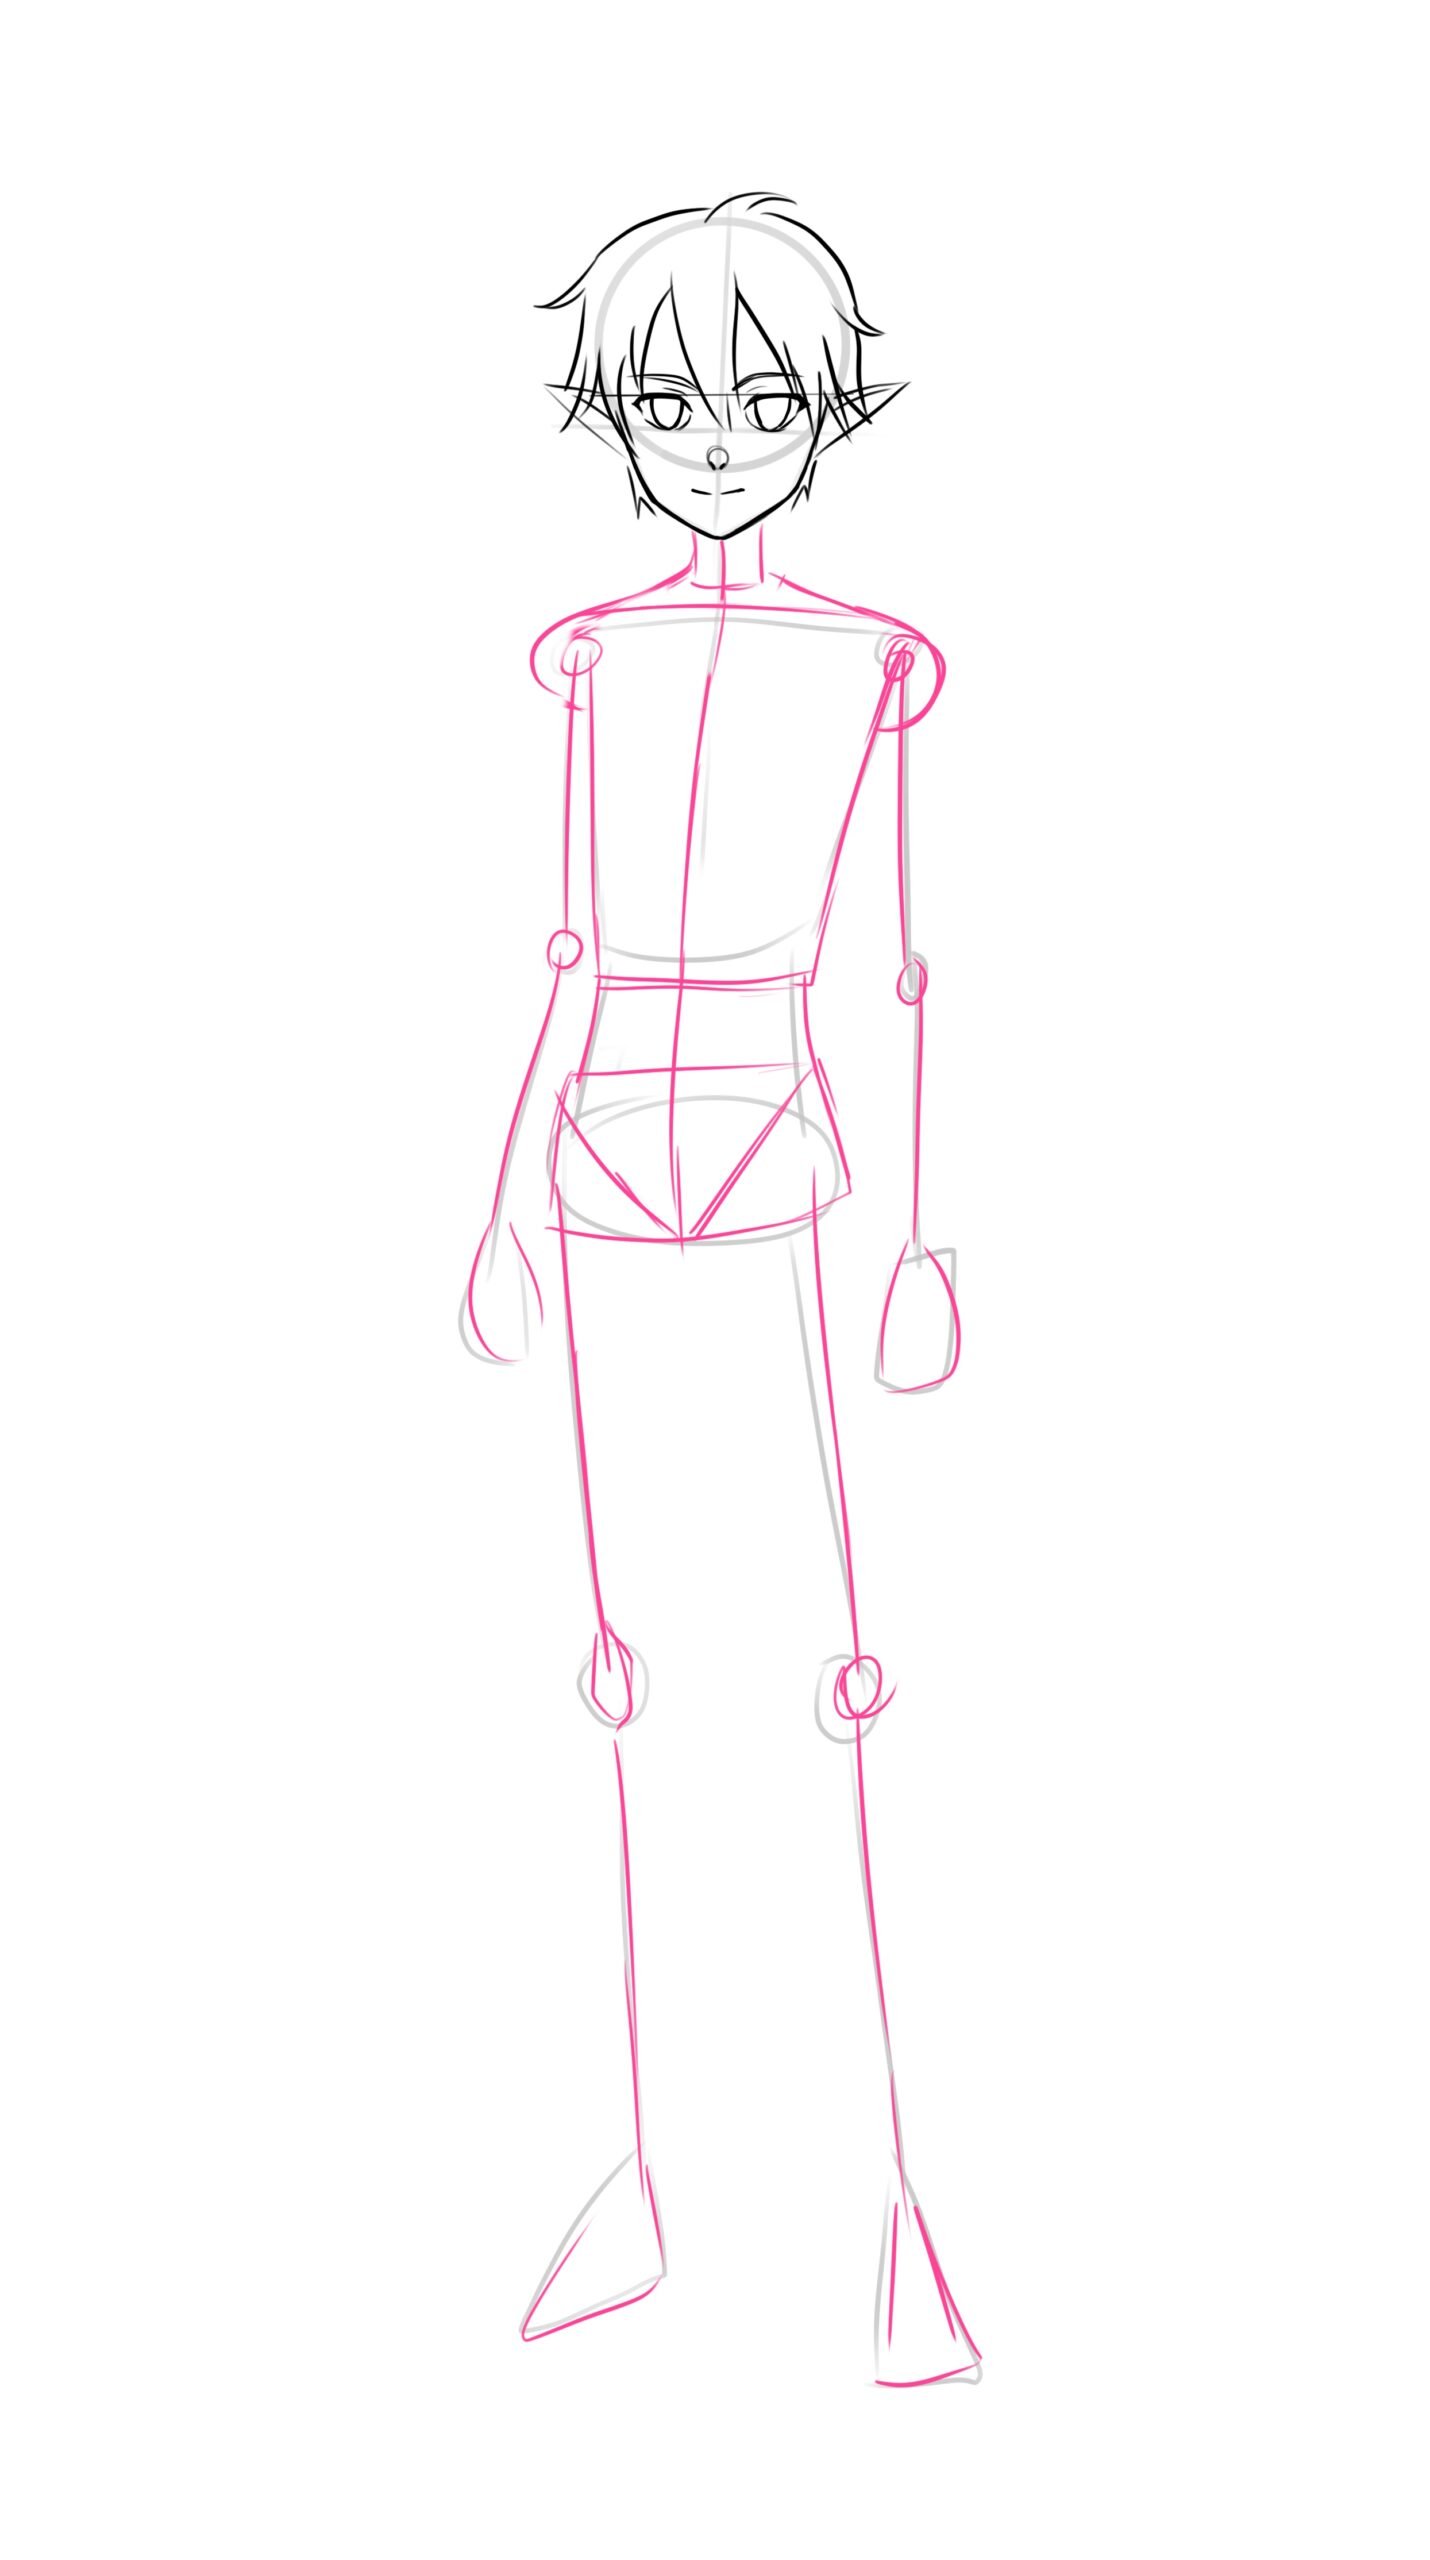 6) Kirito body drawing